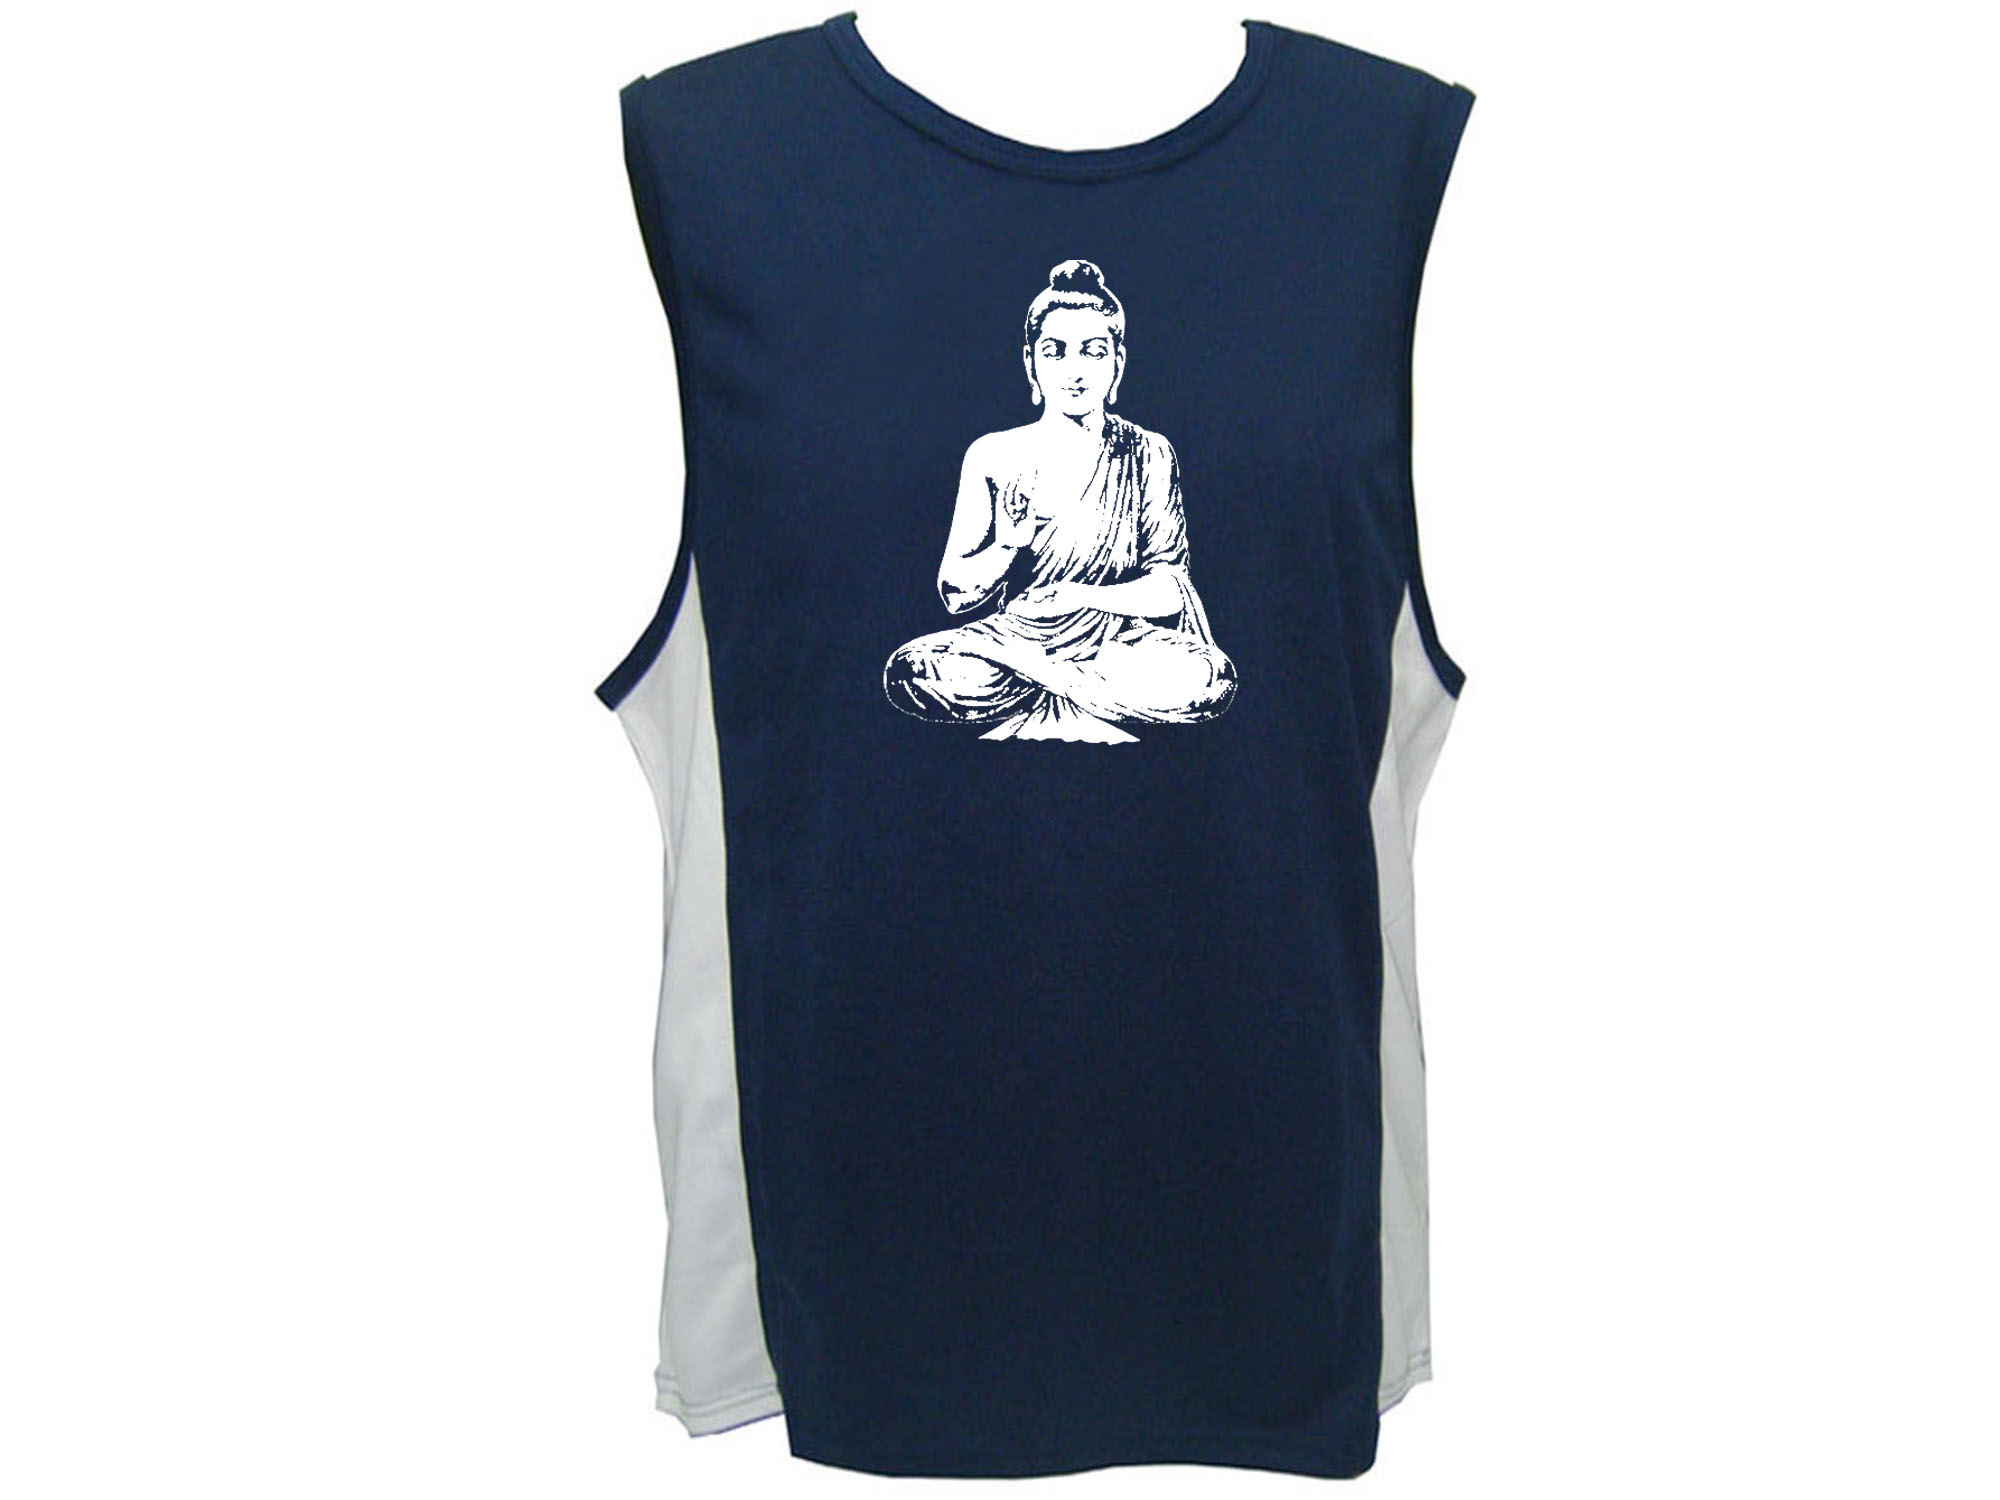 Buddha budah yoga wear sweat proof fabric sleeveless tank top